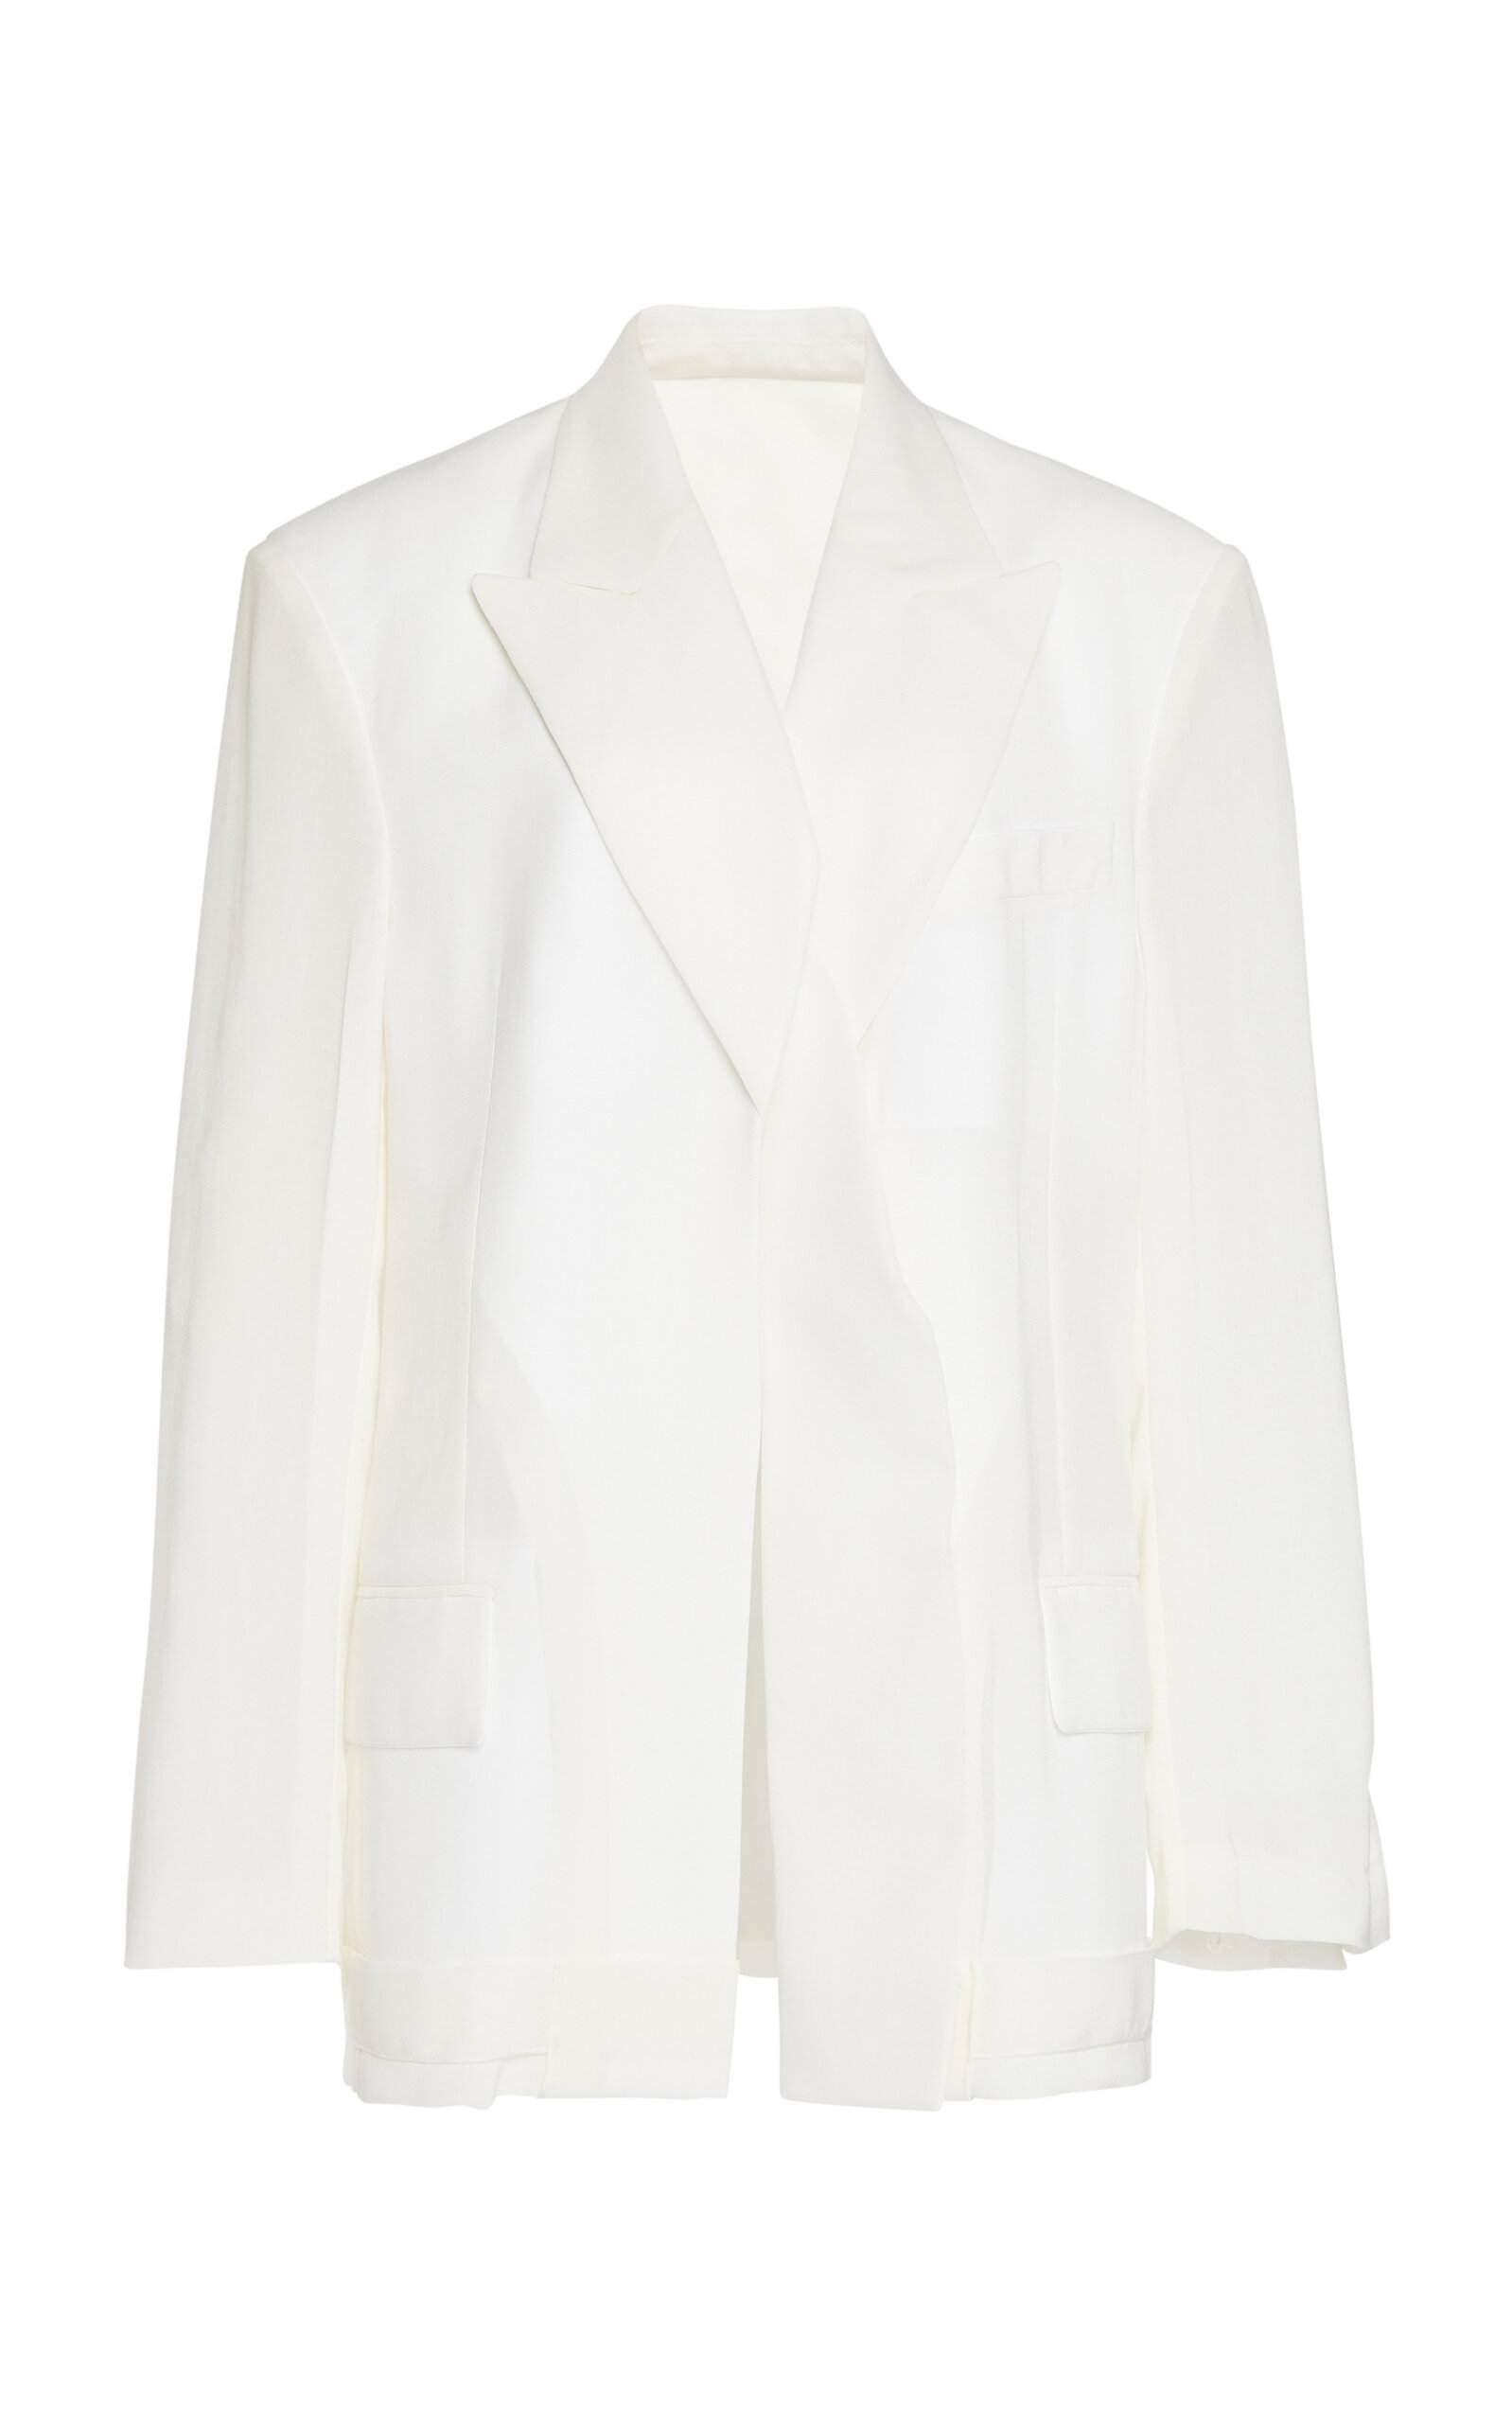 Victoria Beckham - Tailored Wool-Blend Blazer - White - UK 8 - Moda Operandi